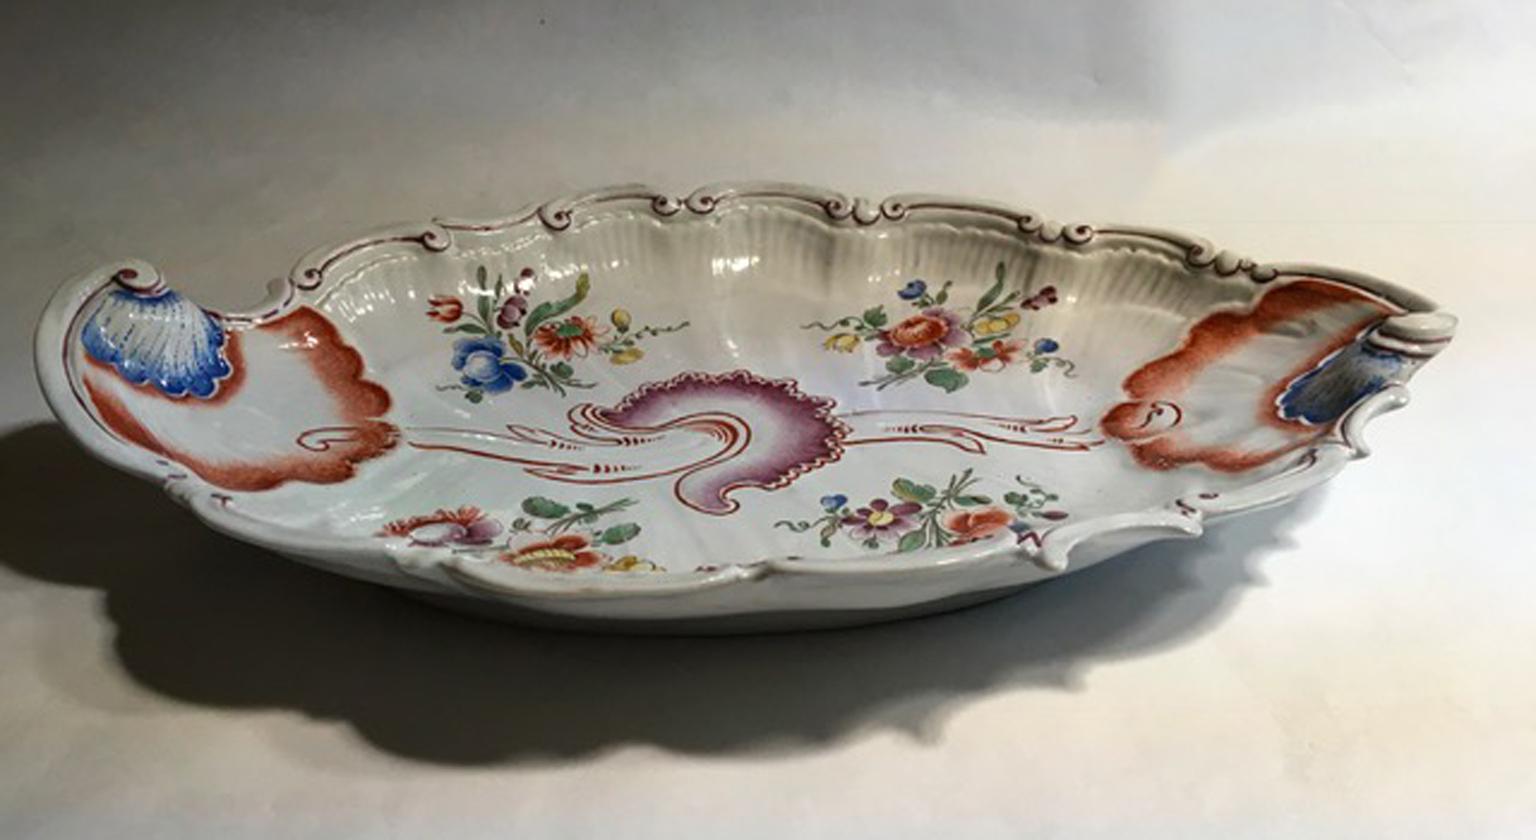 Italy Richard Ginori 1750 Porcelain Bowl For Sale 1